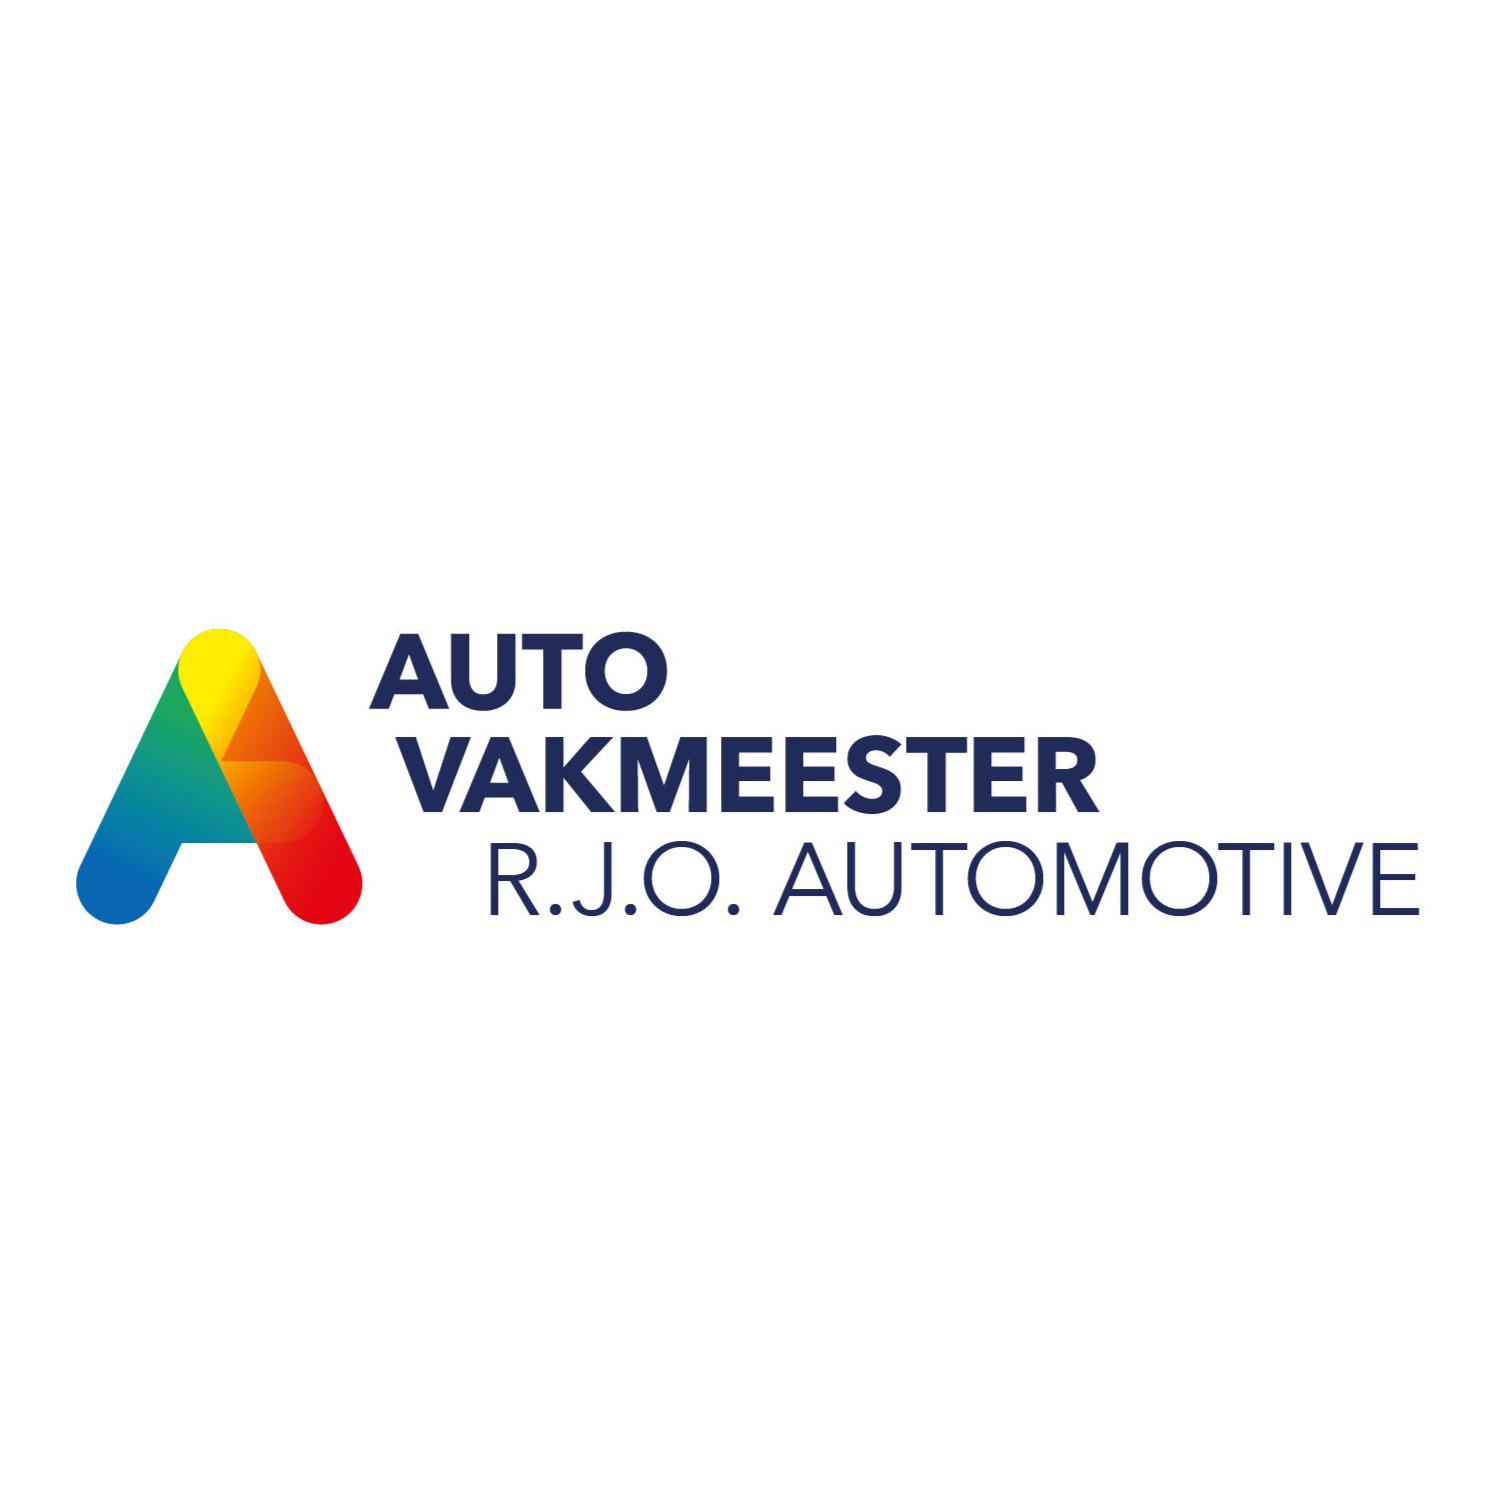 Autovakmeester R.J.O. Automotive Logo